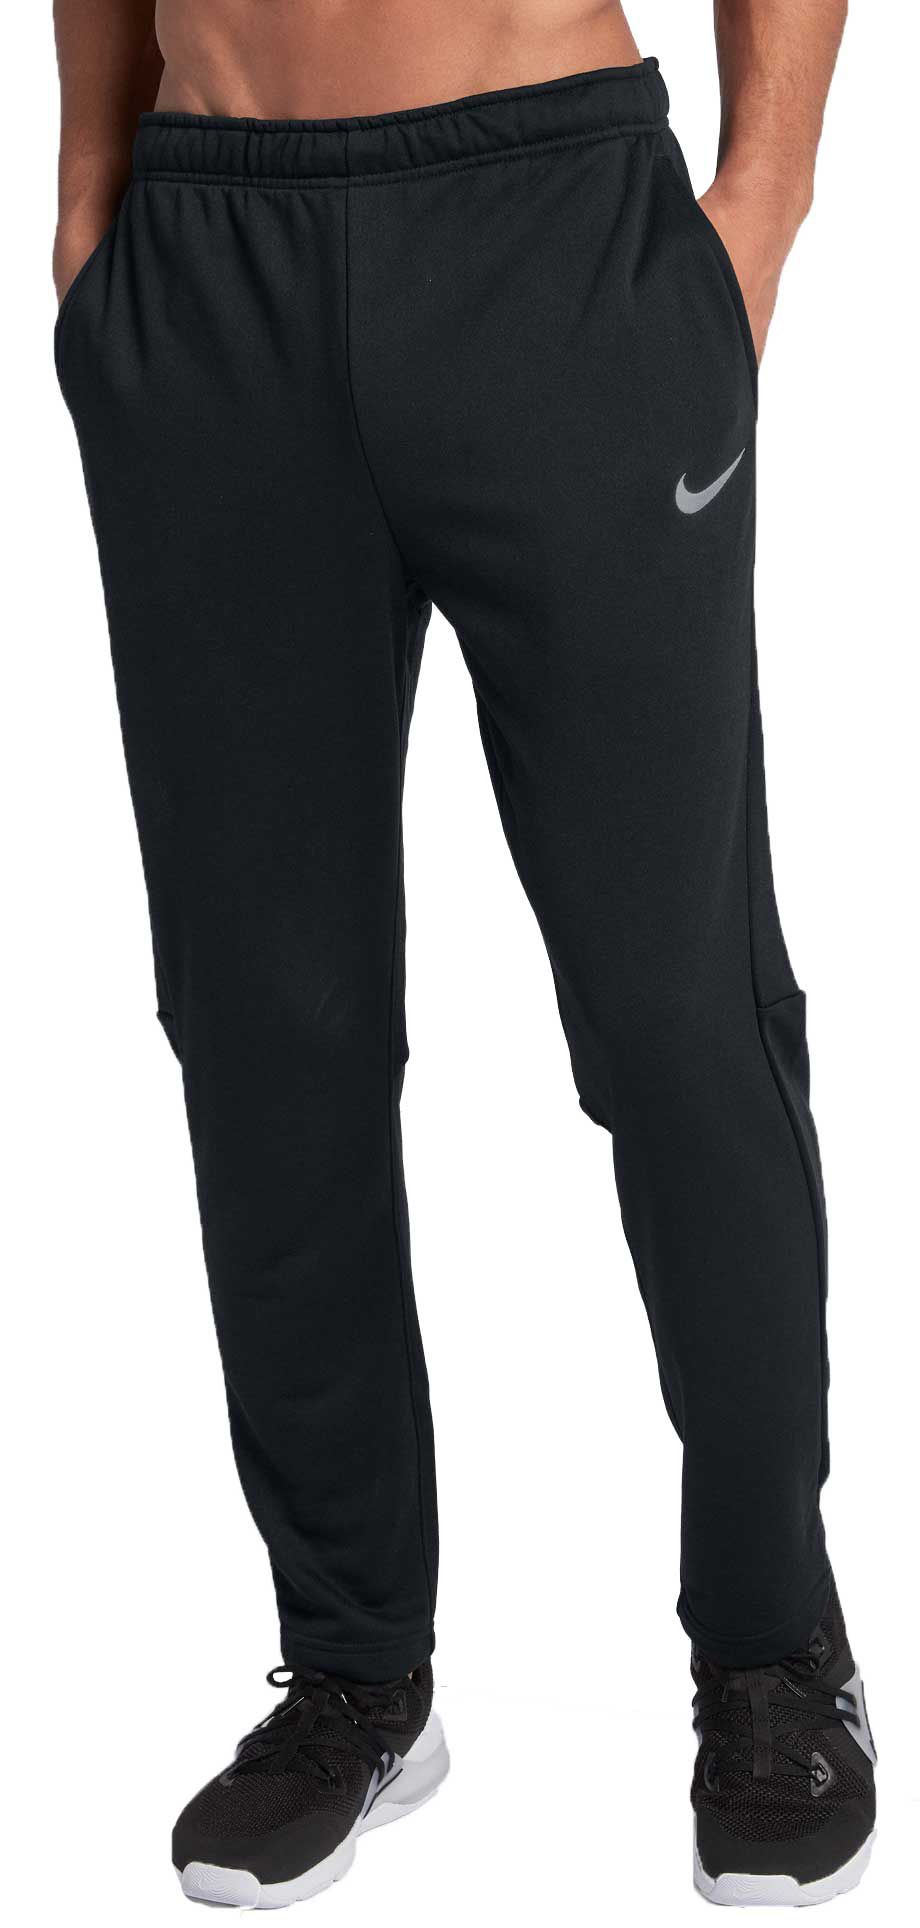 Nike Men's Dry Regular Fleece Pants (Regular and Big & Tall) - .97 - .97